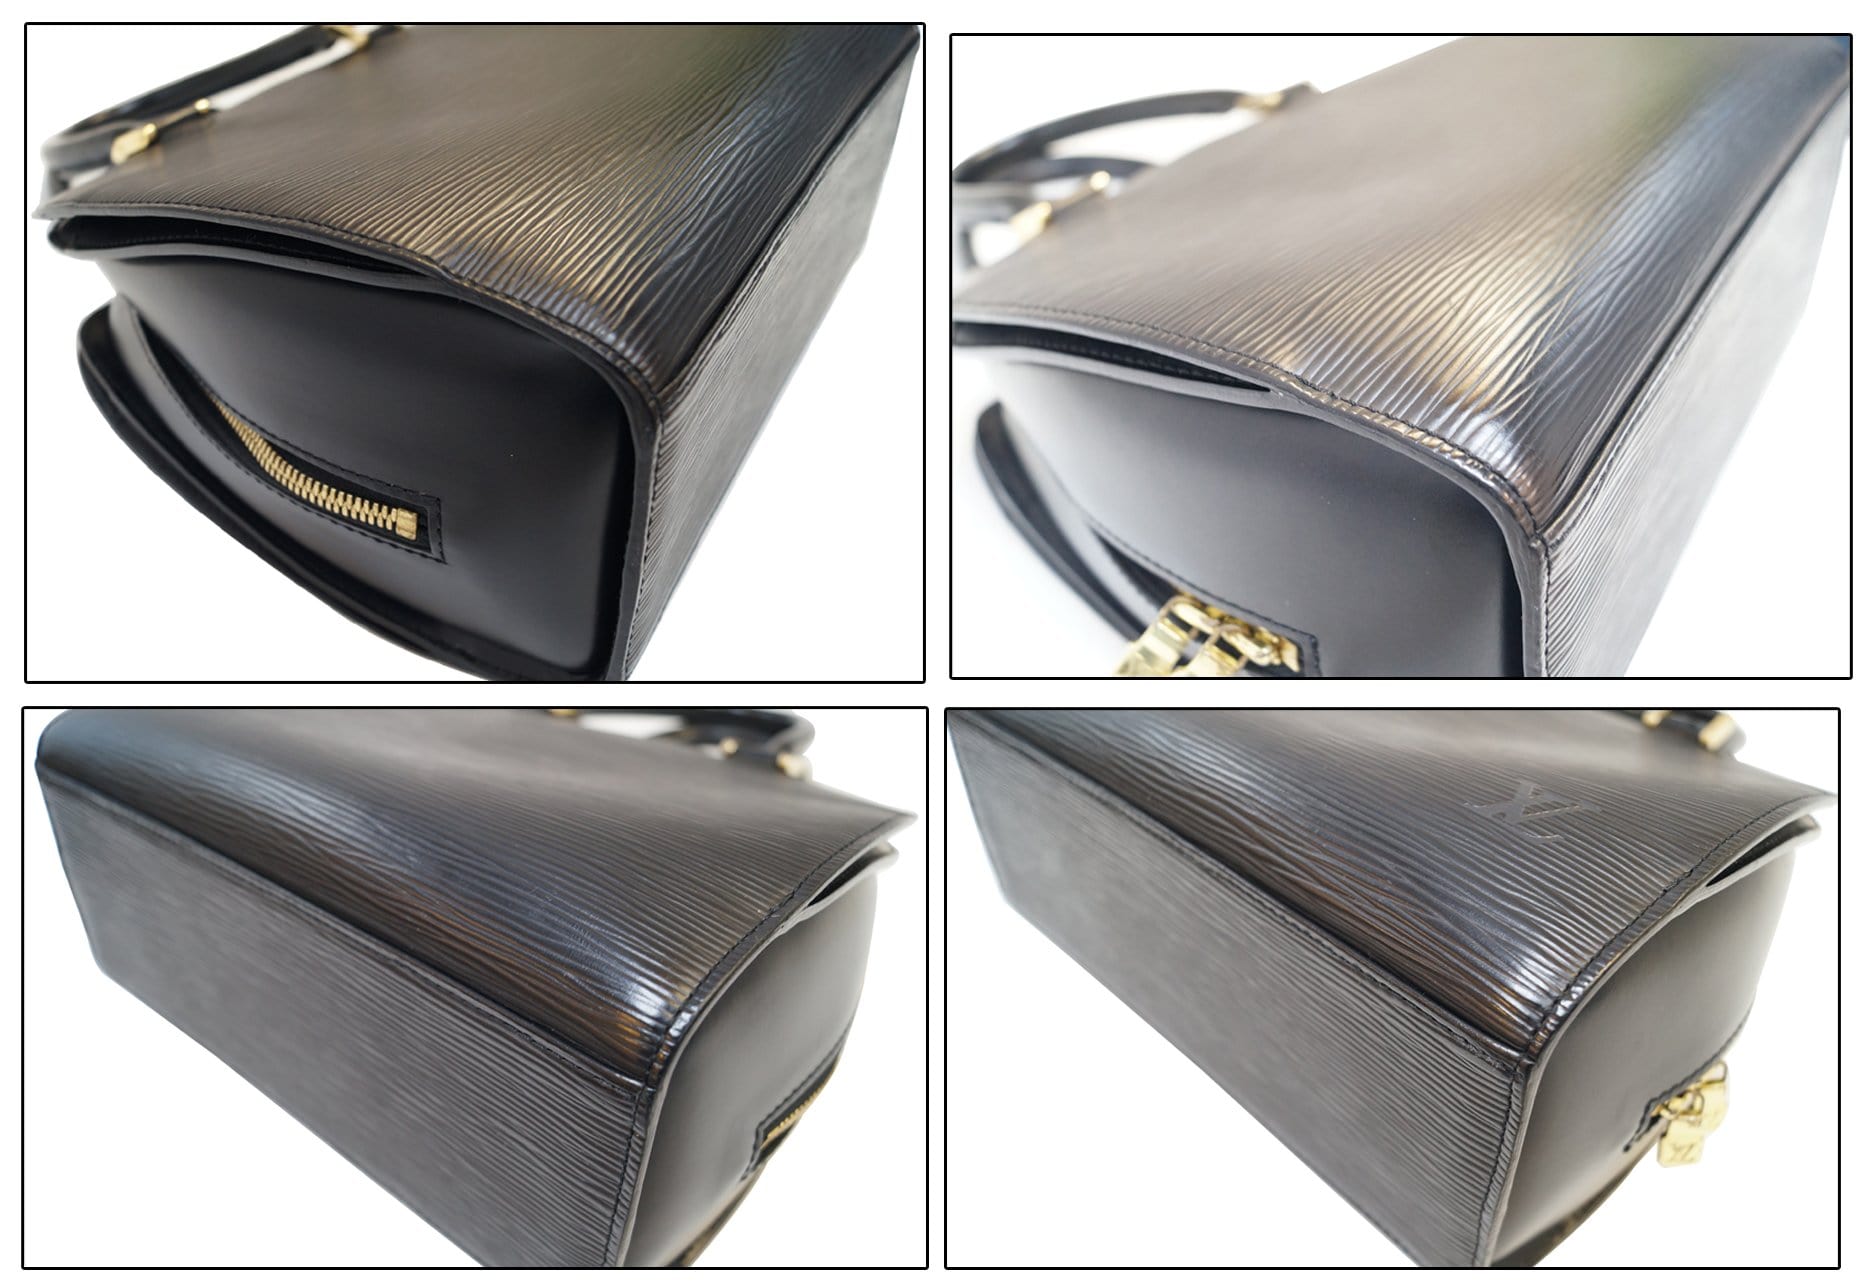 Louis Vuitton Pont Neuf Top Handle Bag PM Black Leather